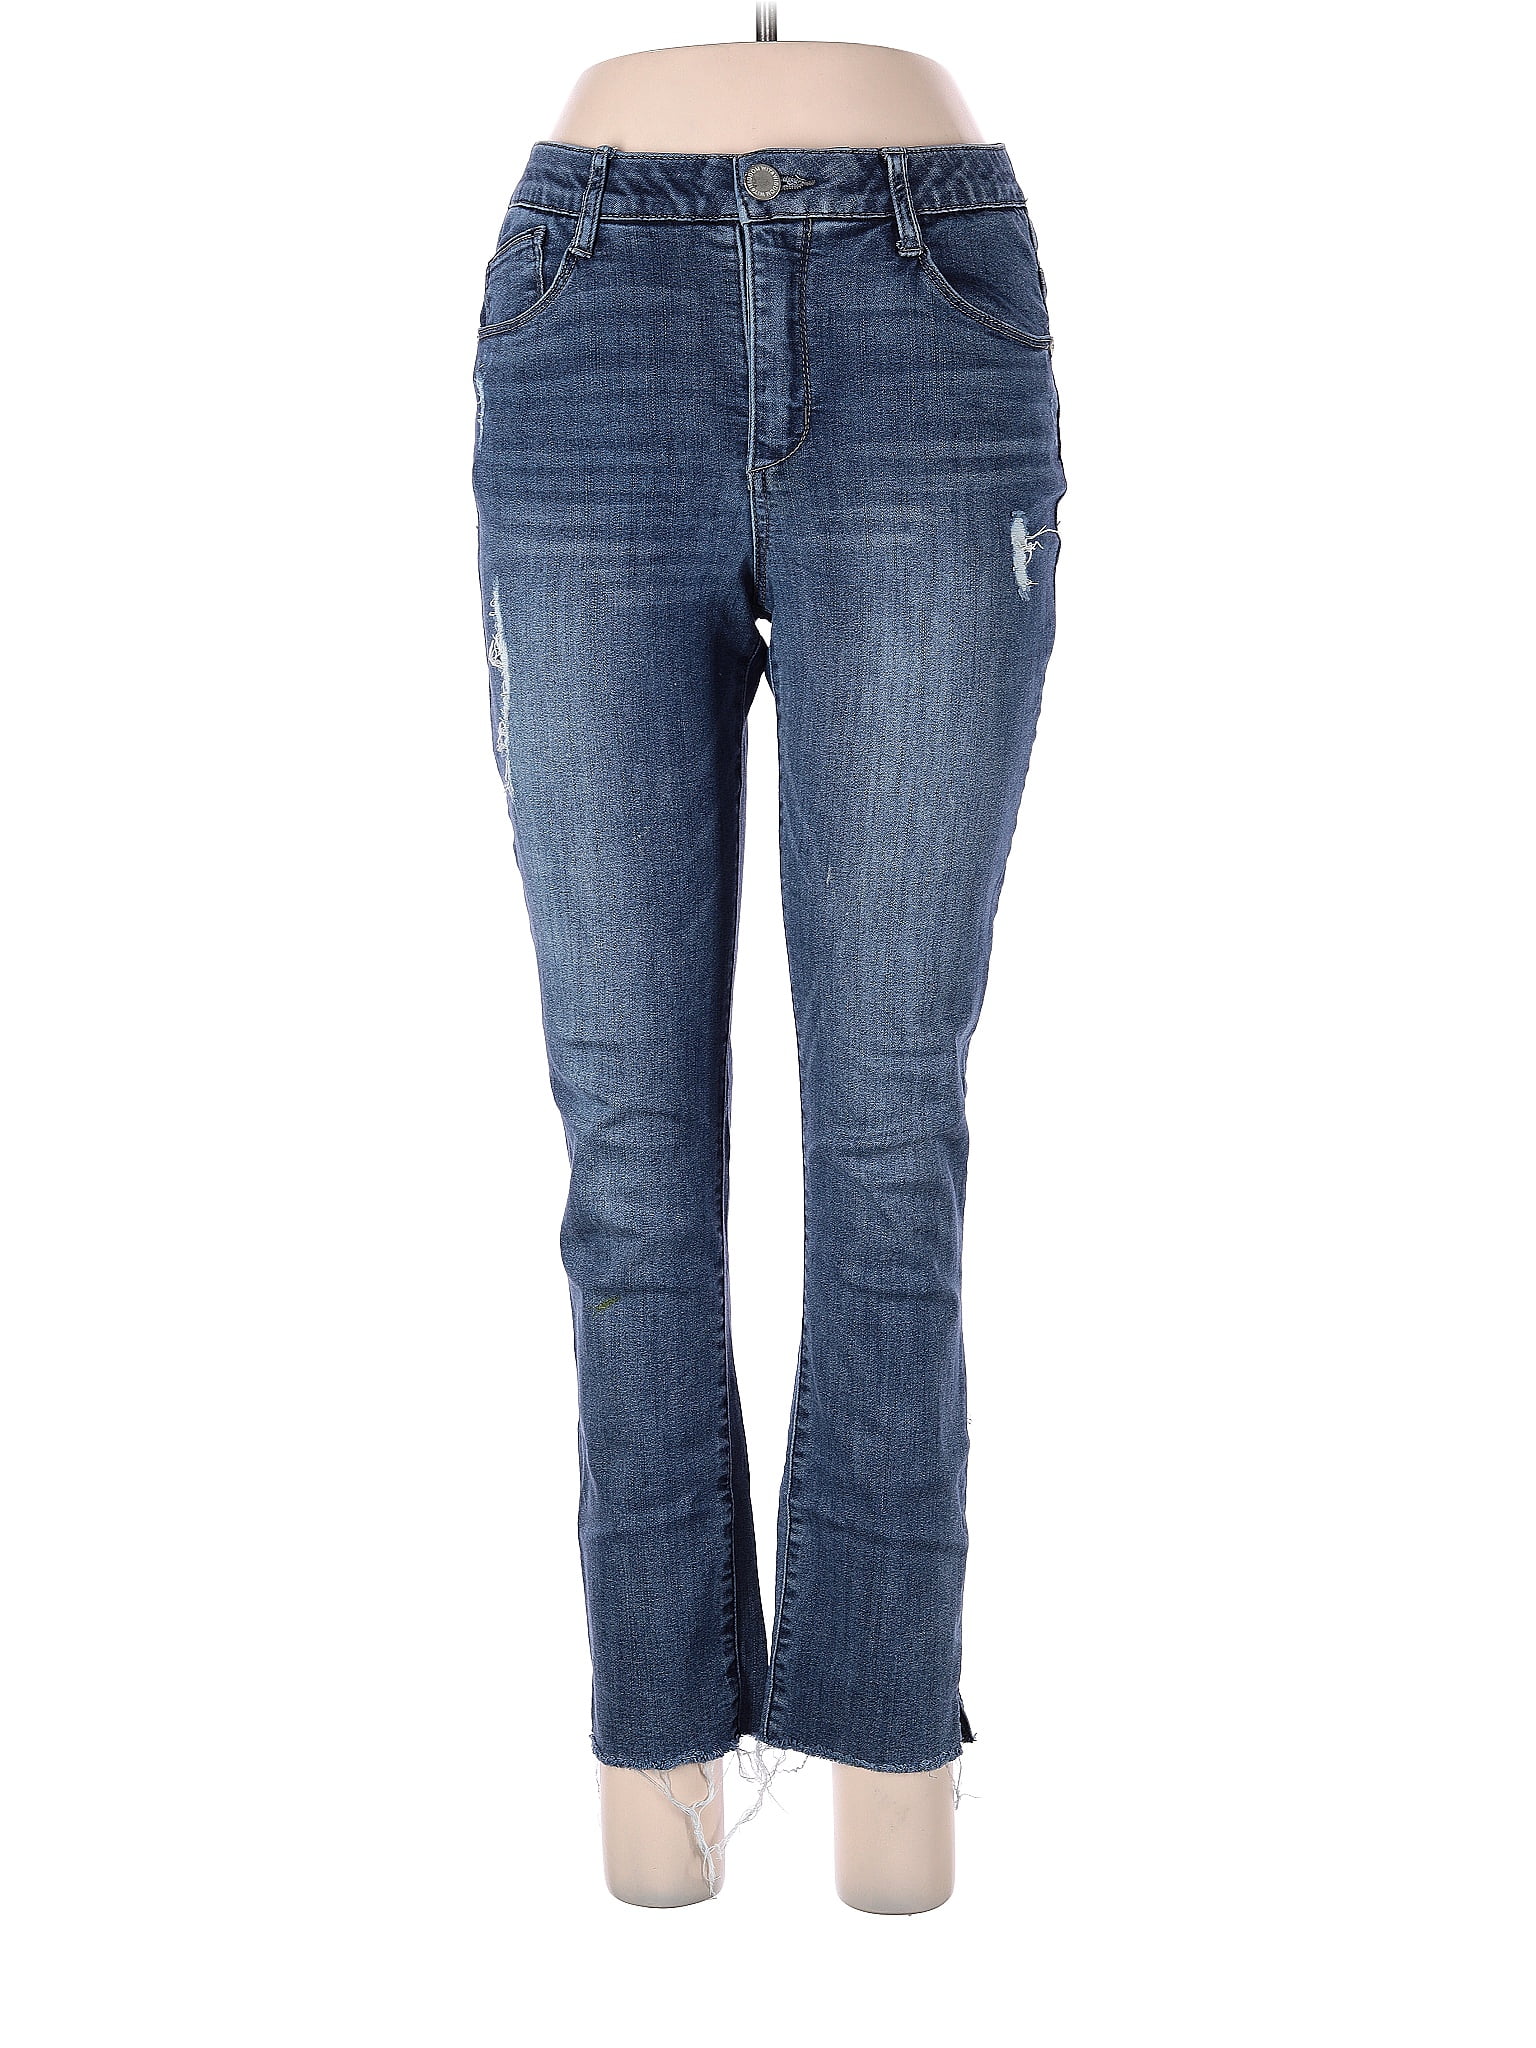 Wit & Wisdom Solid Blue Jeans Size 6 - 70% off | thredUP